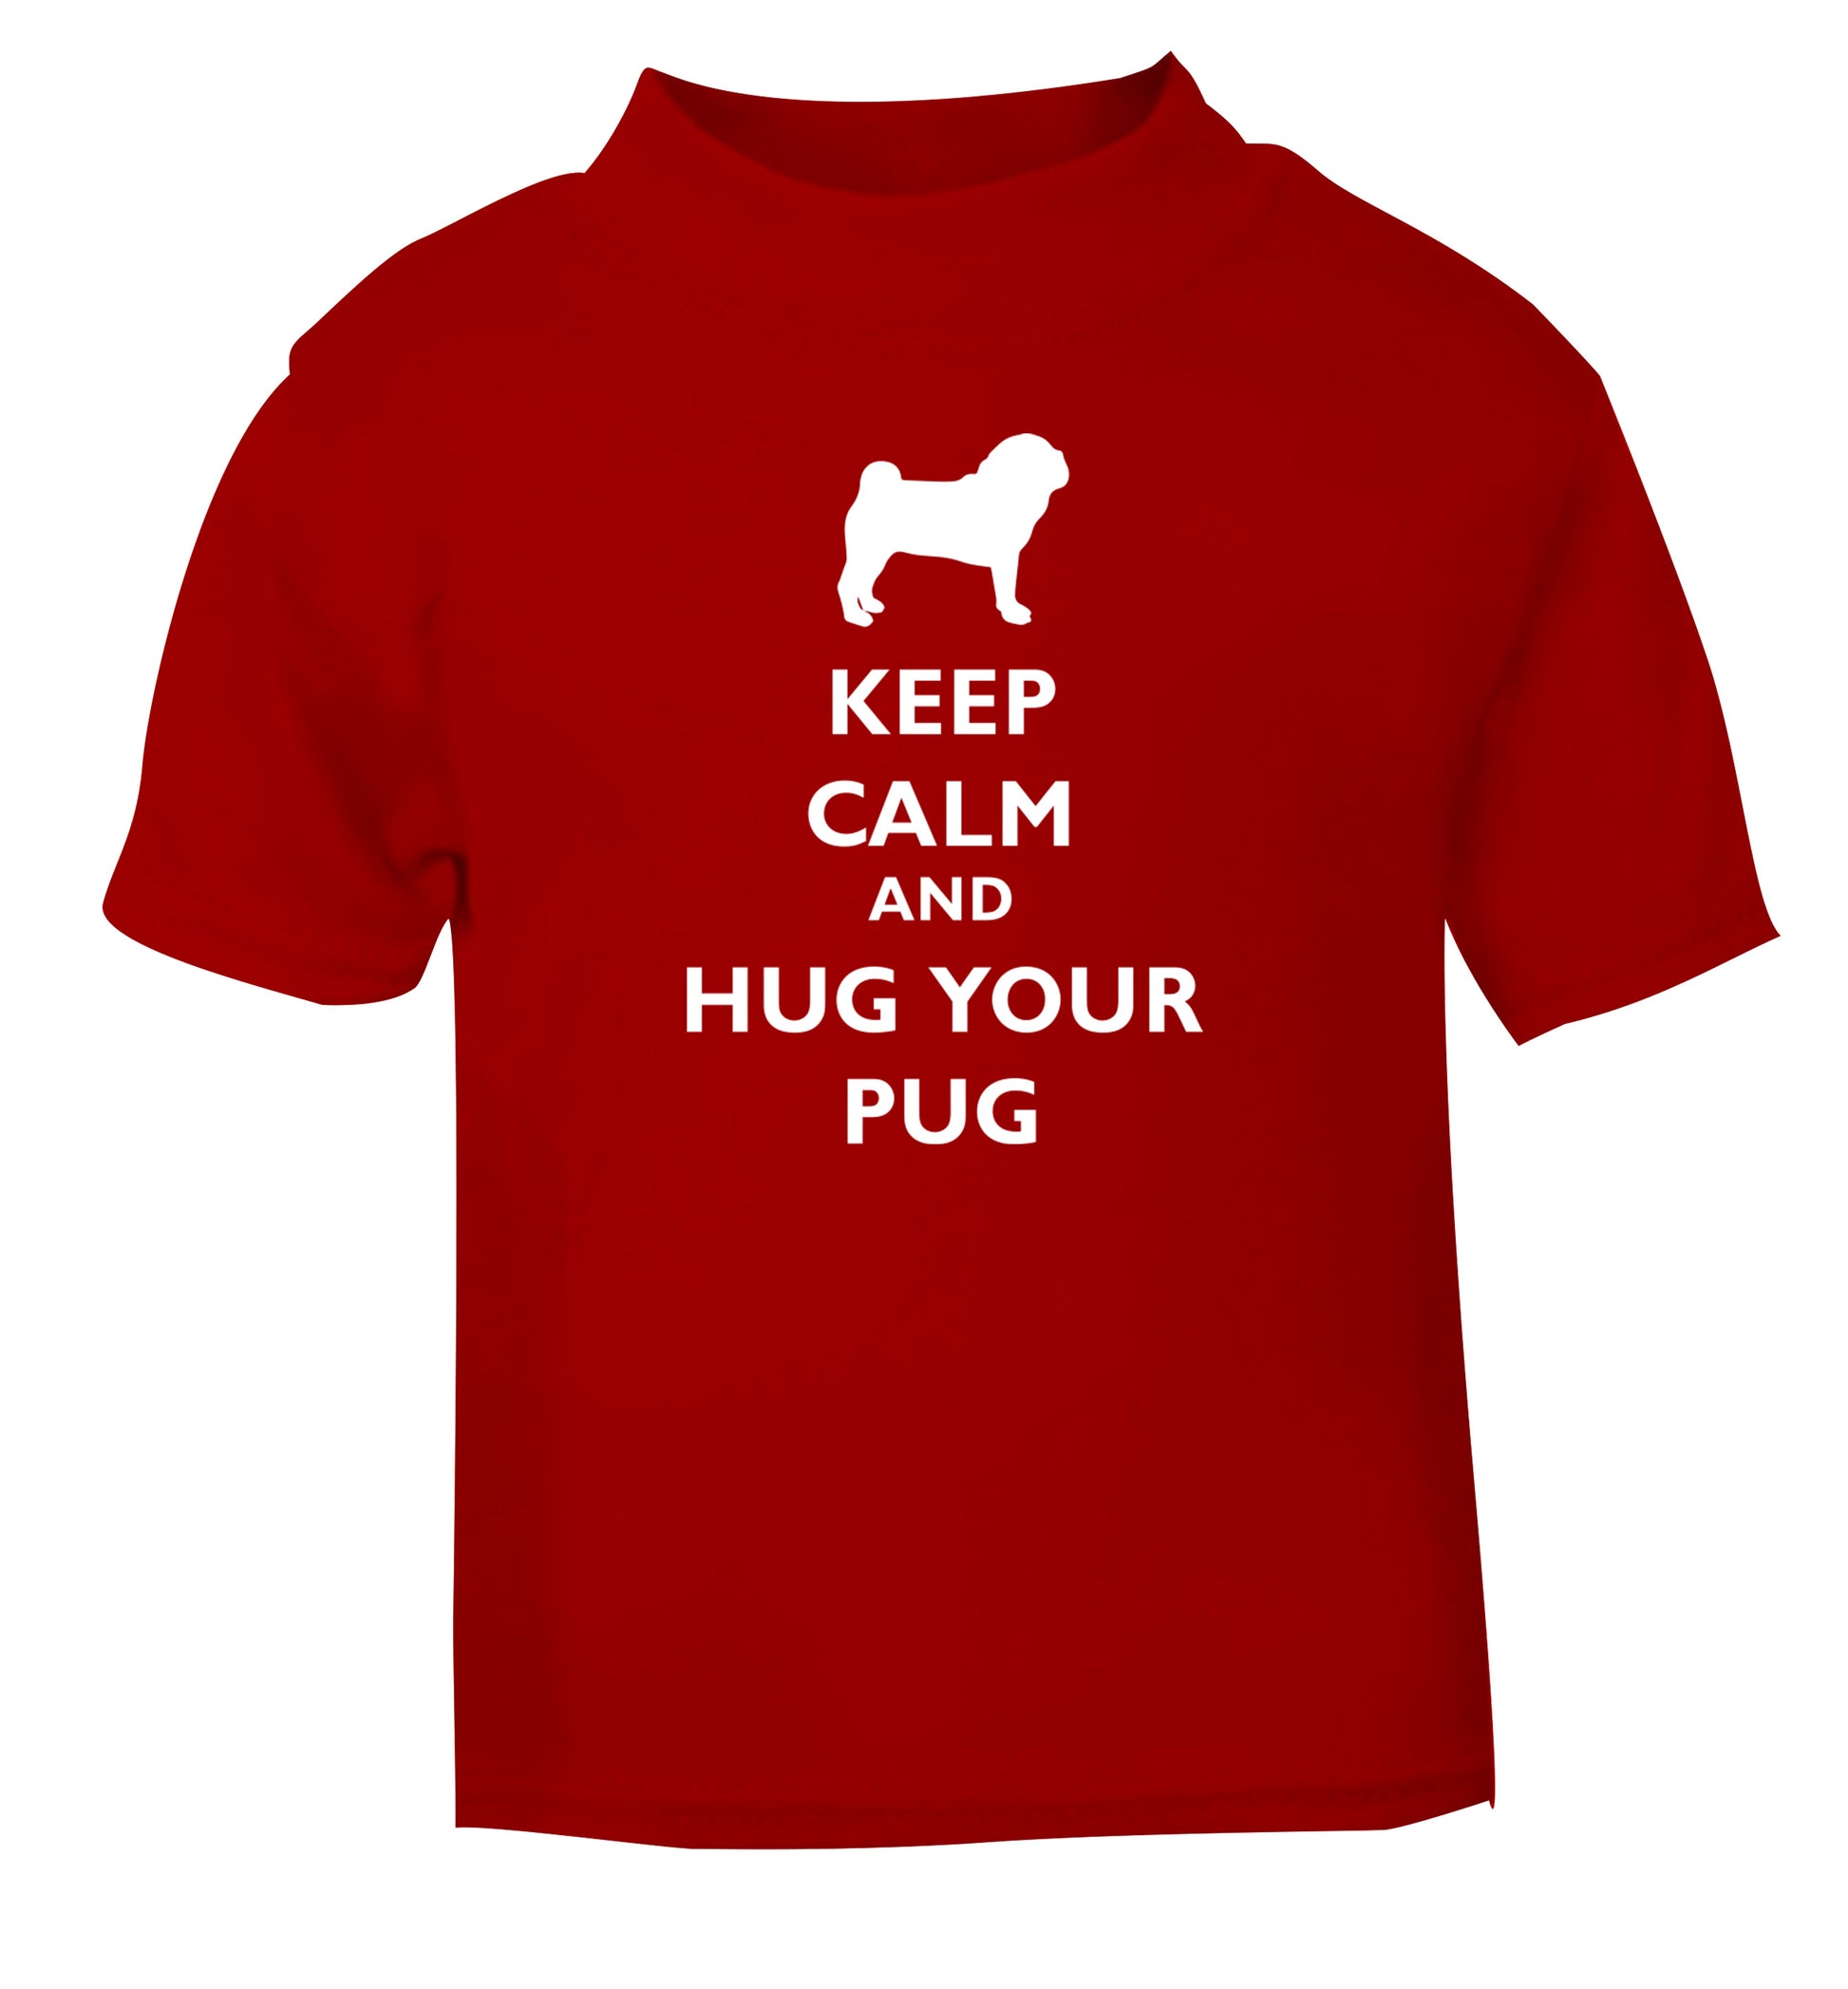 Keep calm and hug your pug red Baby Toddler Tshirt 2 Years